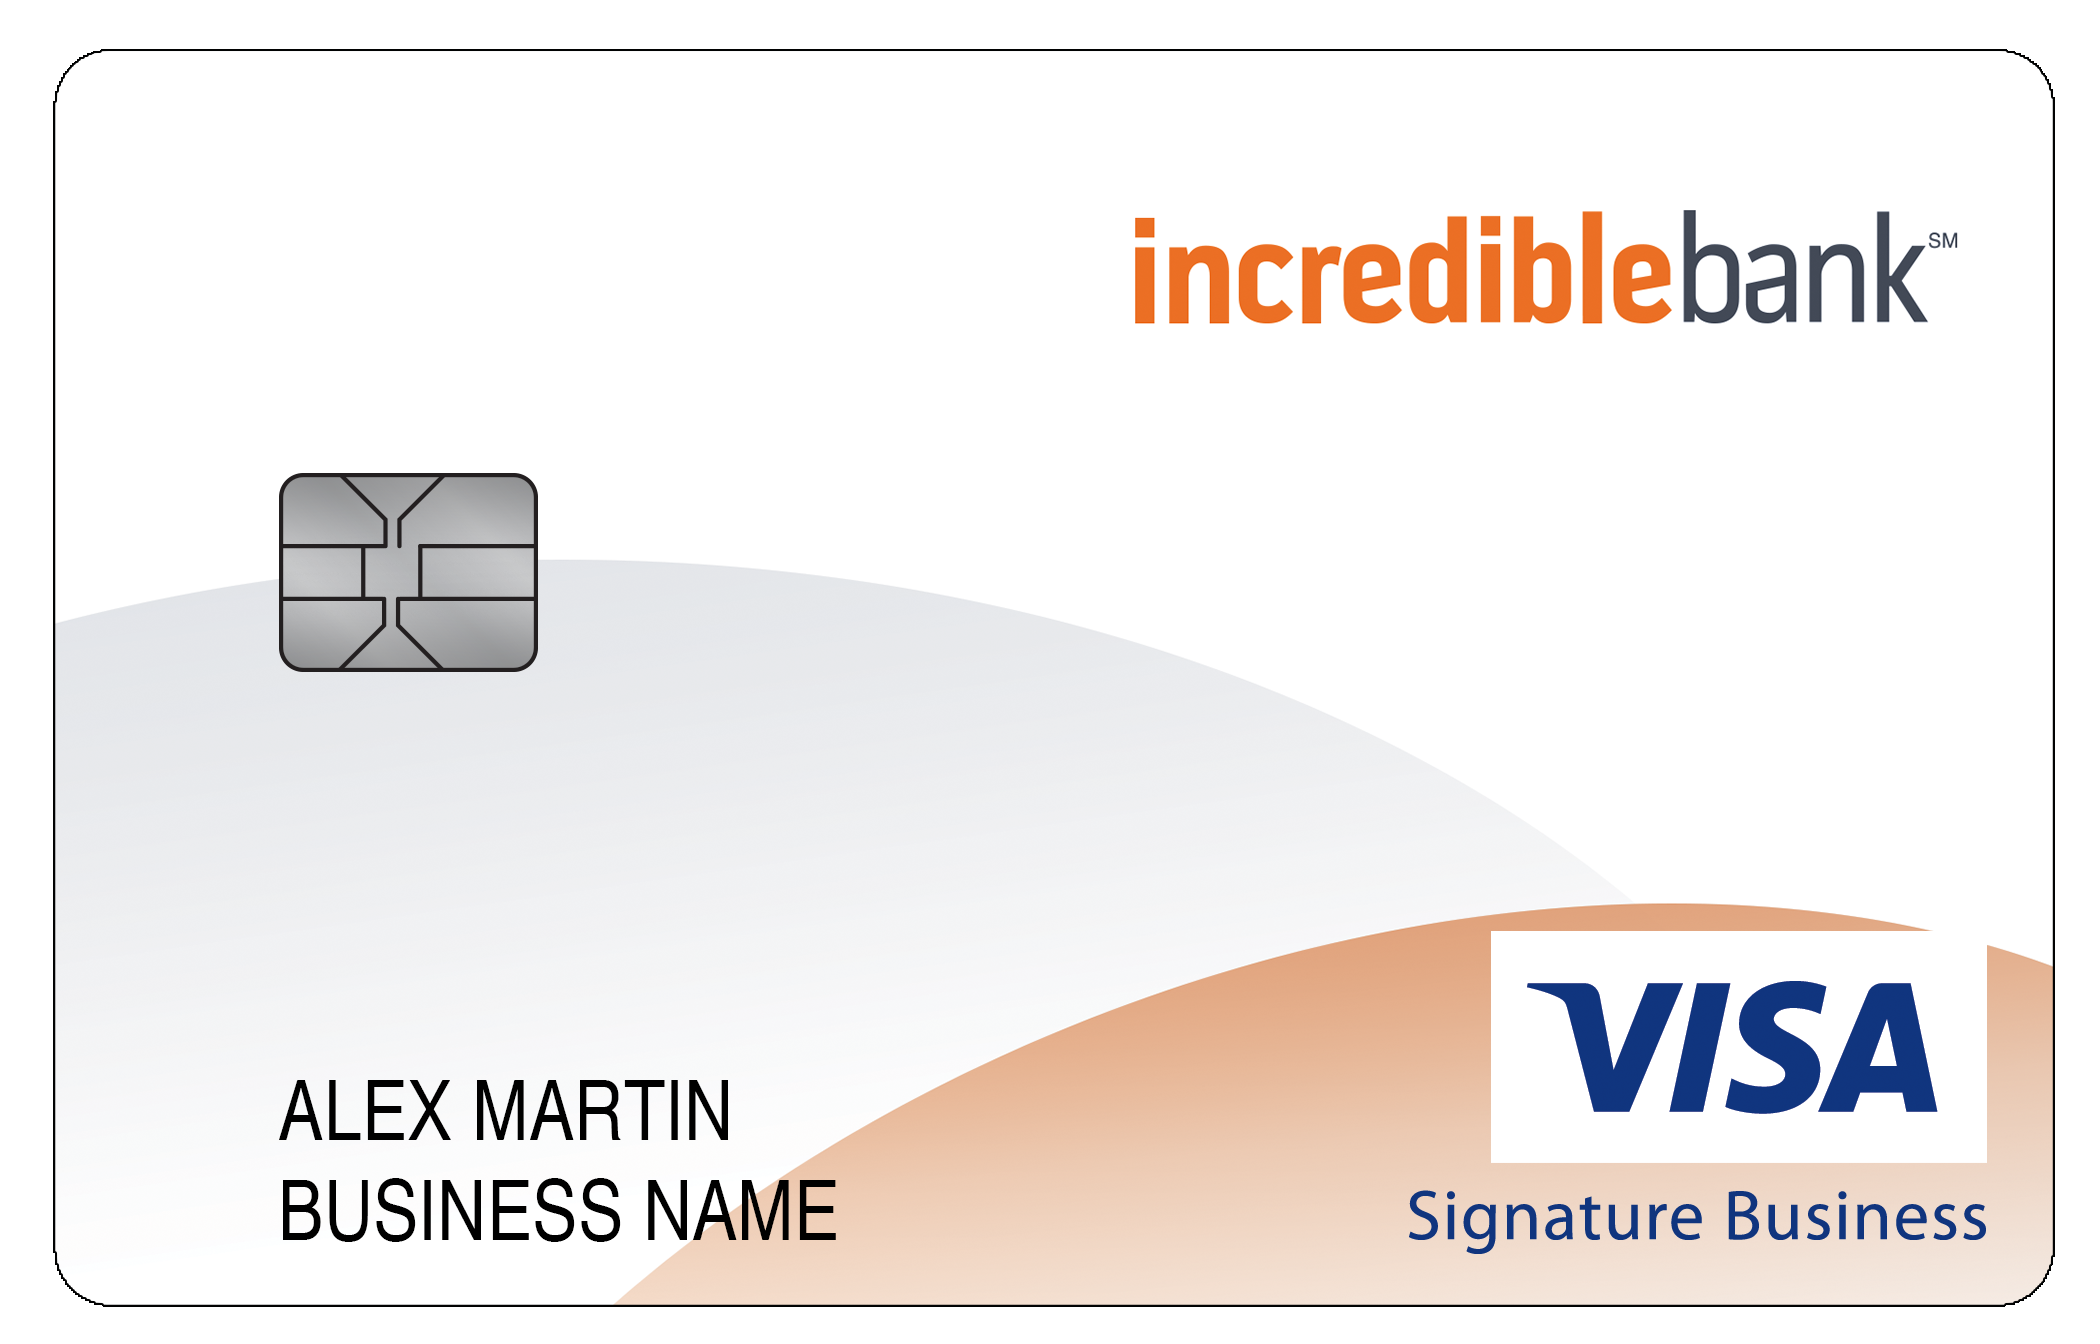 IncredibleBank Smart Business Rewards Card